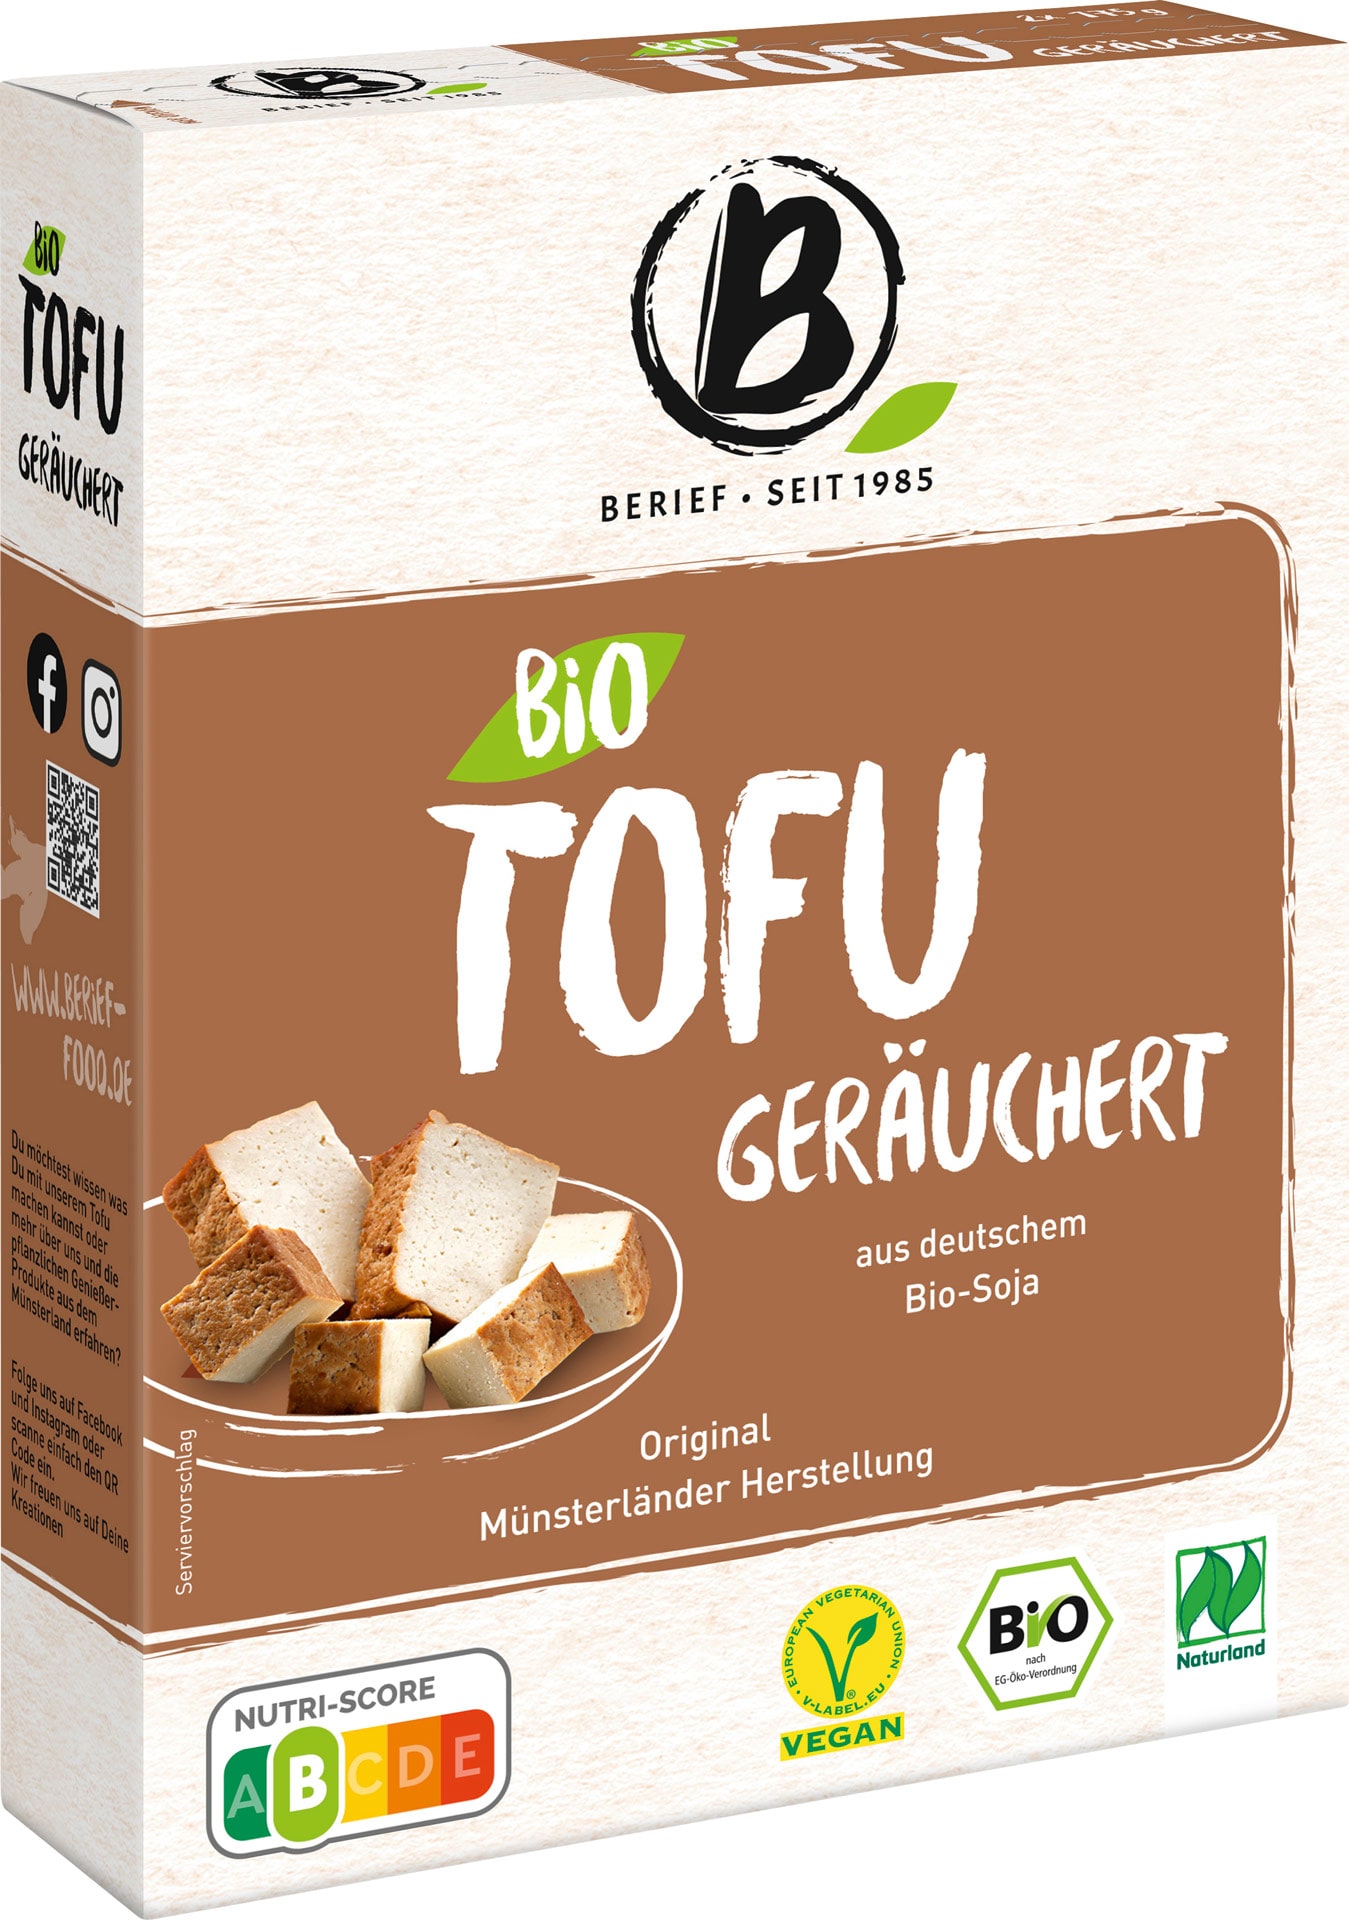 Berief Tofu geräuchert vegan 2 x 175g Bio